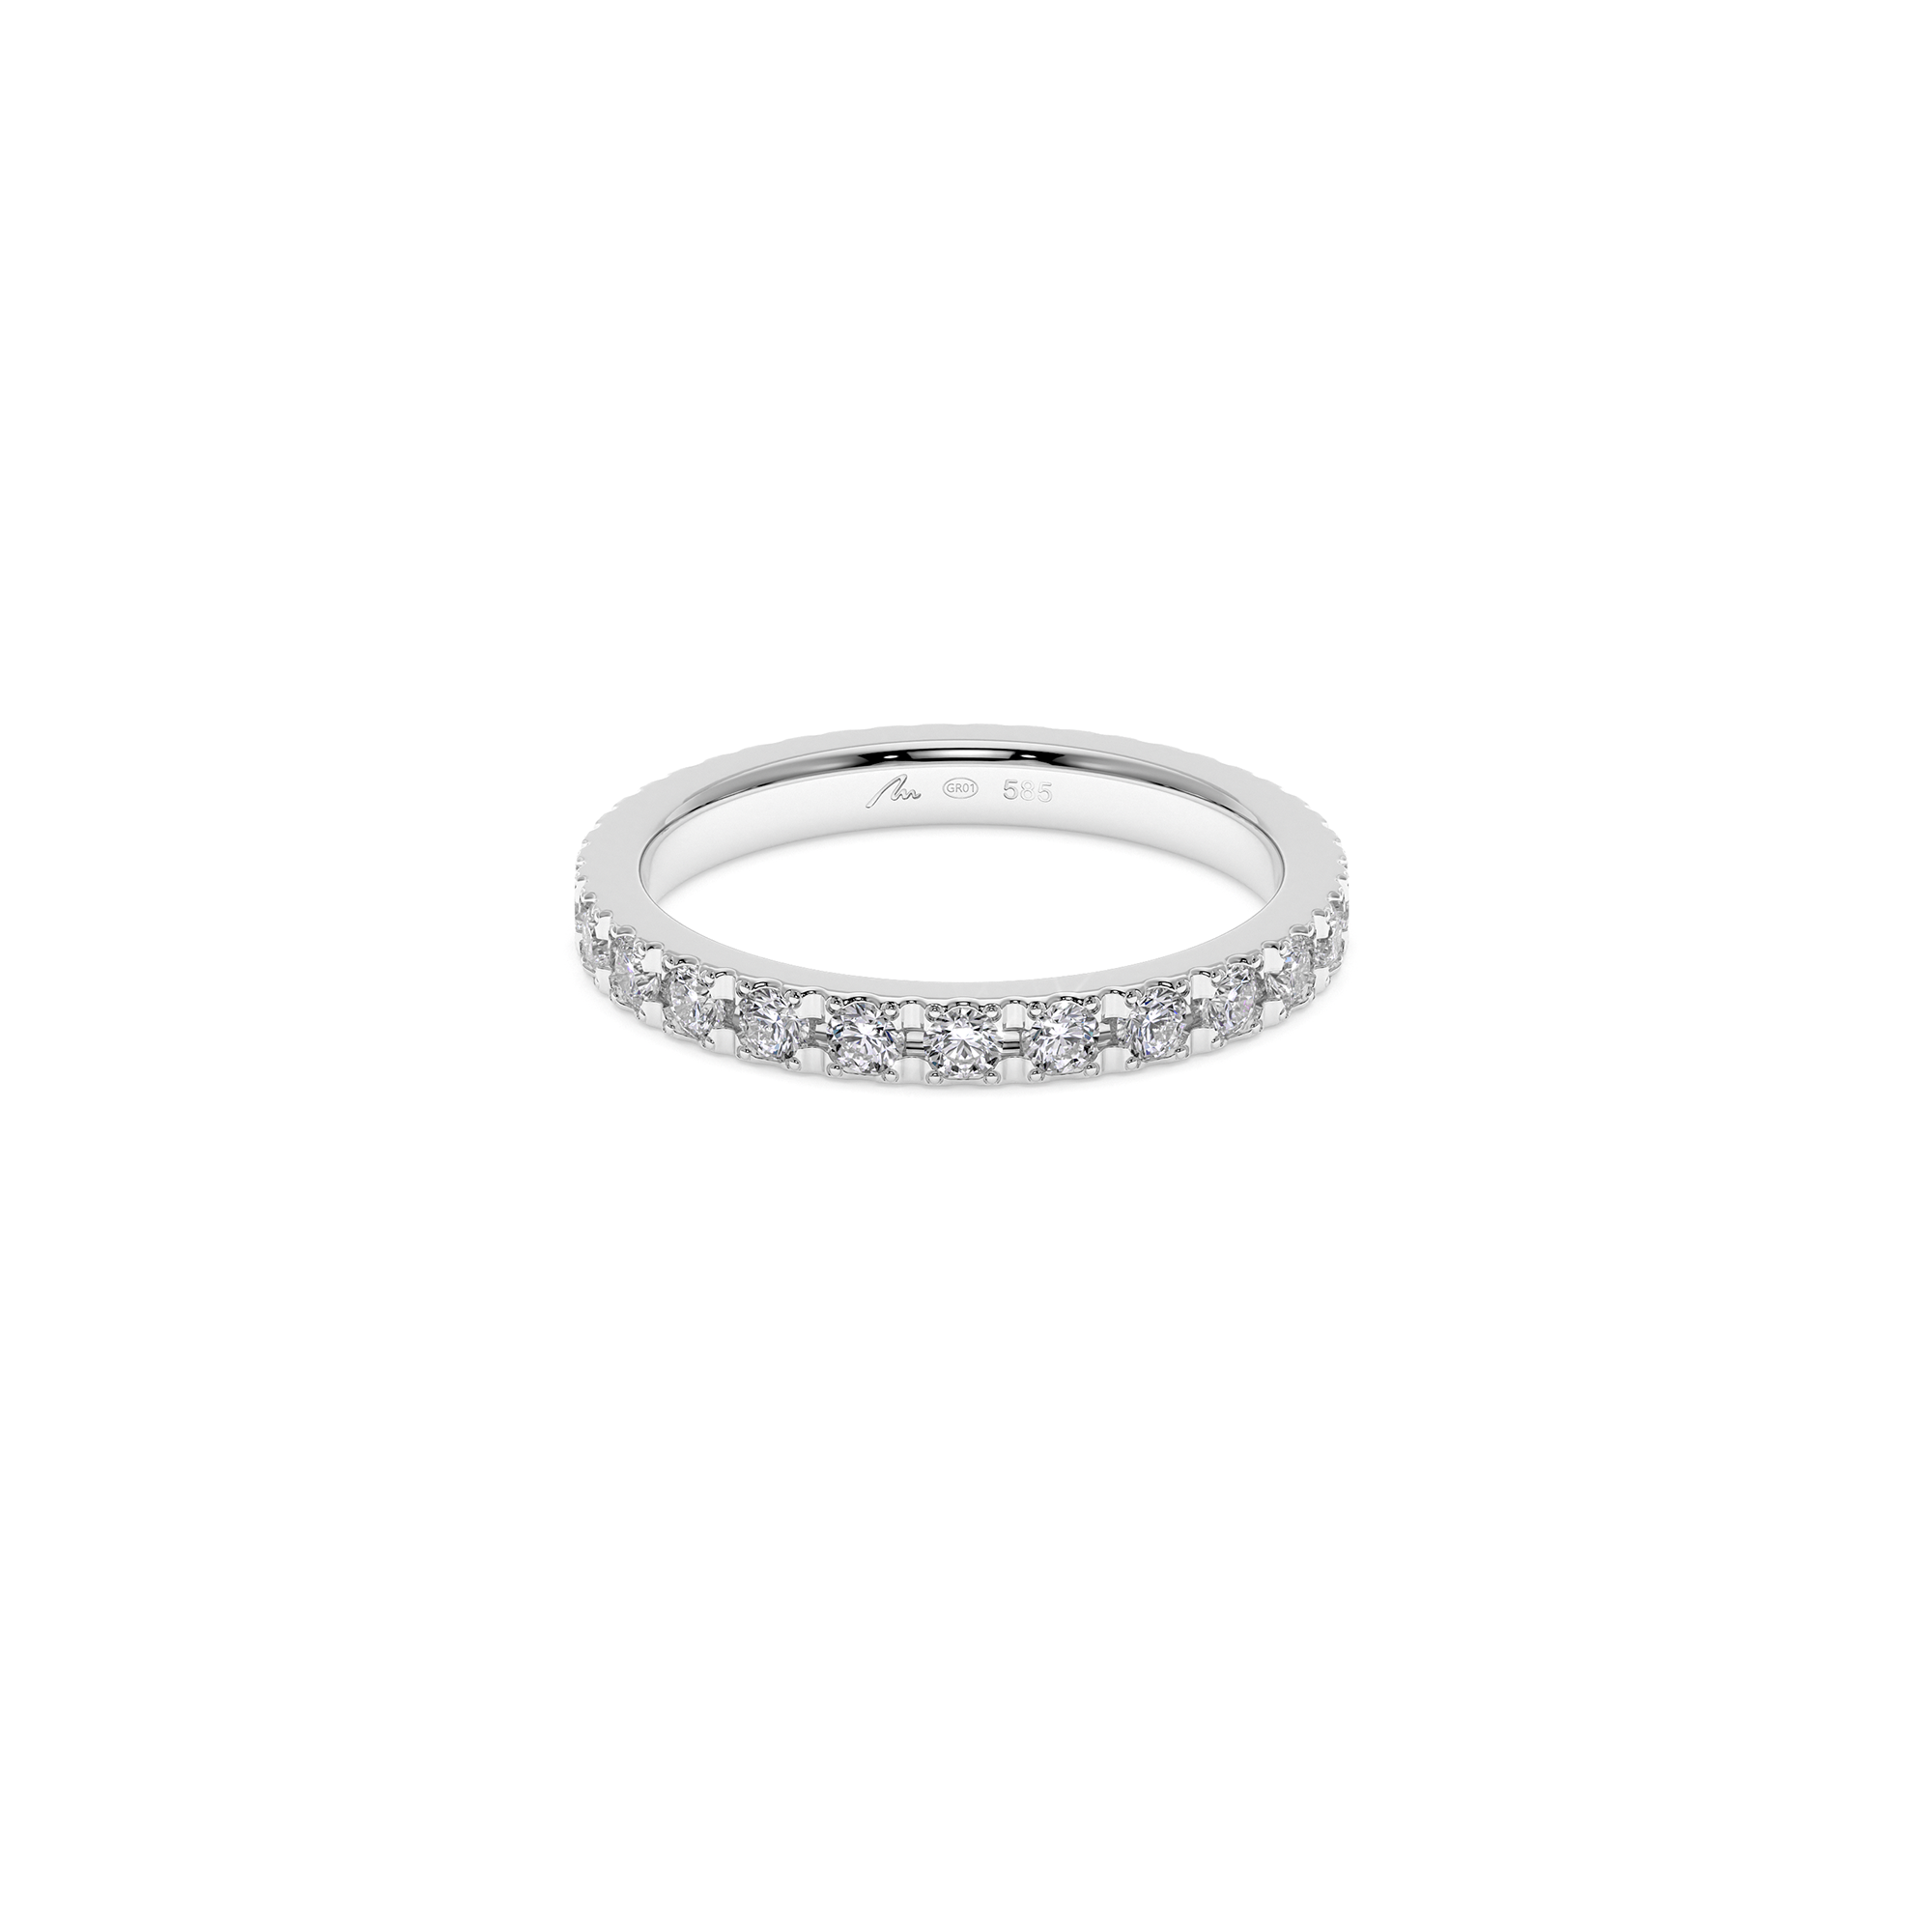 14 k white gold Tennis ring with 0.84 CT white diamonds